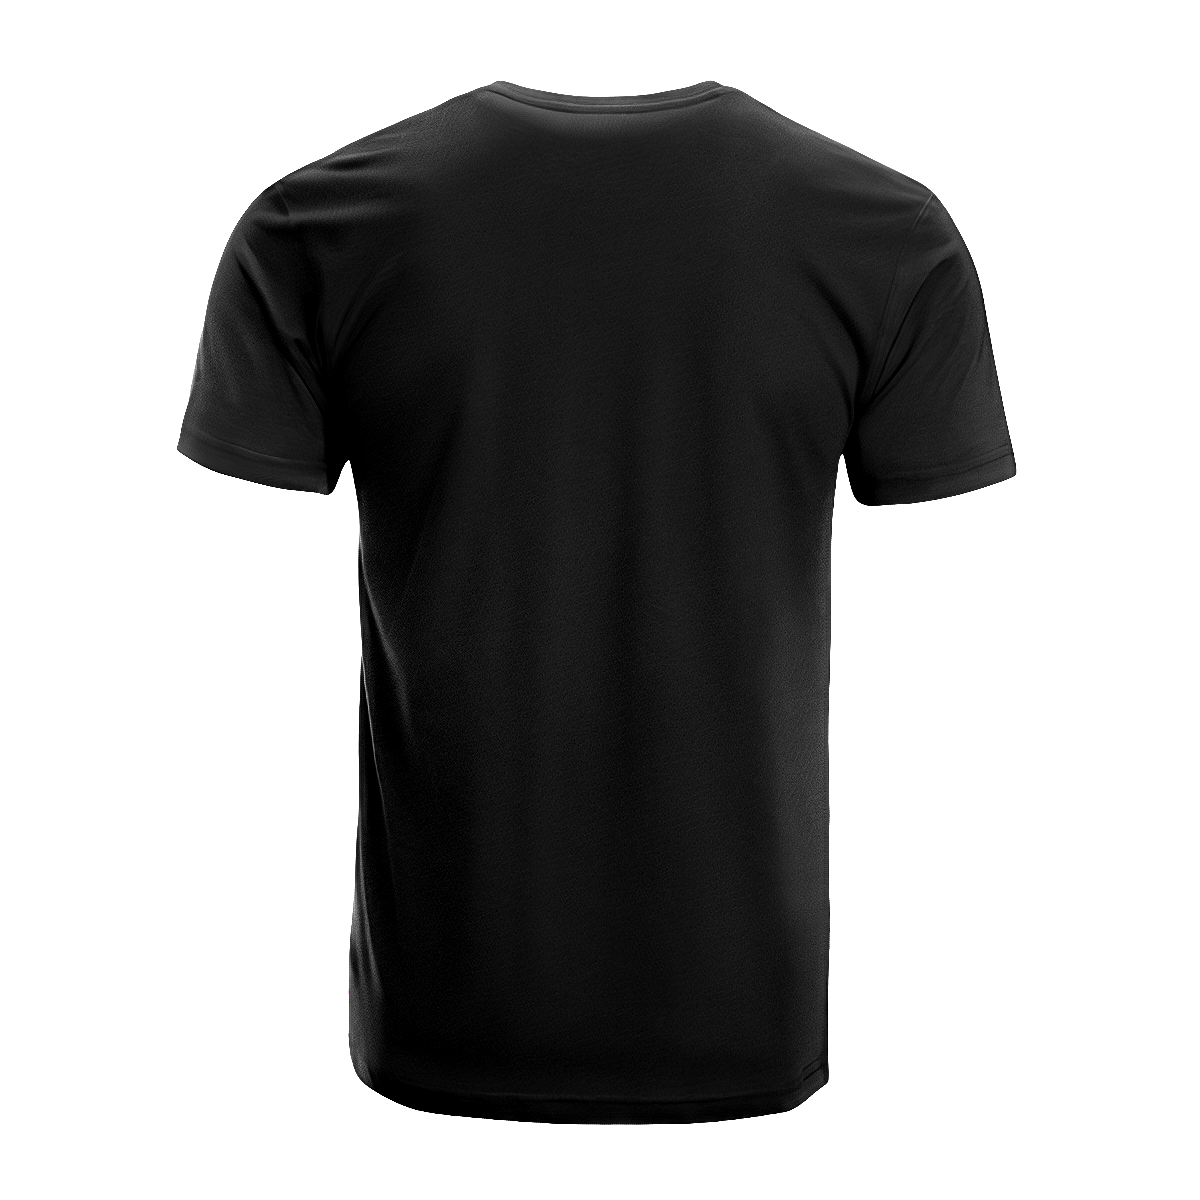 Jackson Tartan Crest T-shirt - I'm not yelling style - Kid